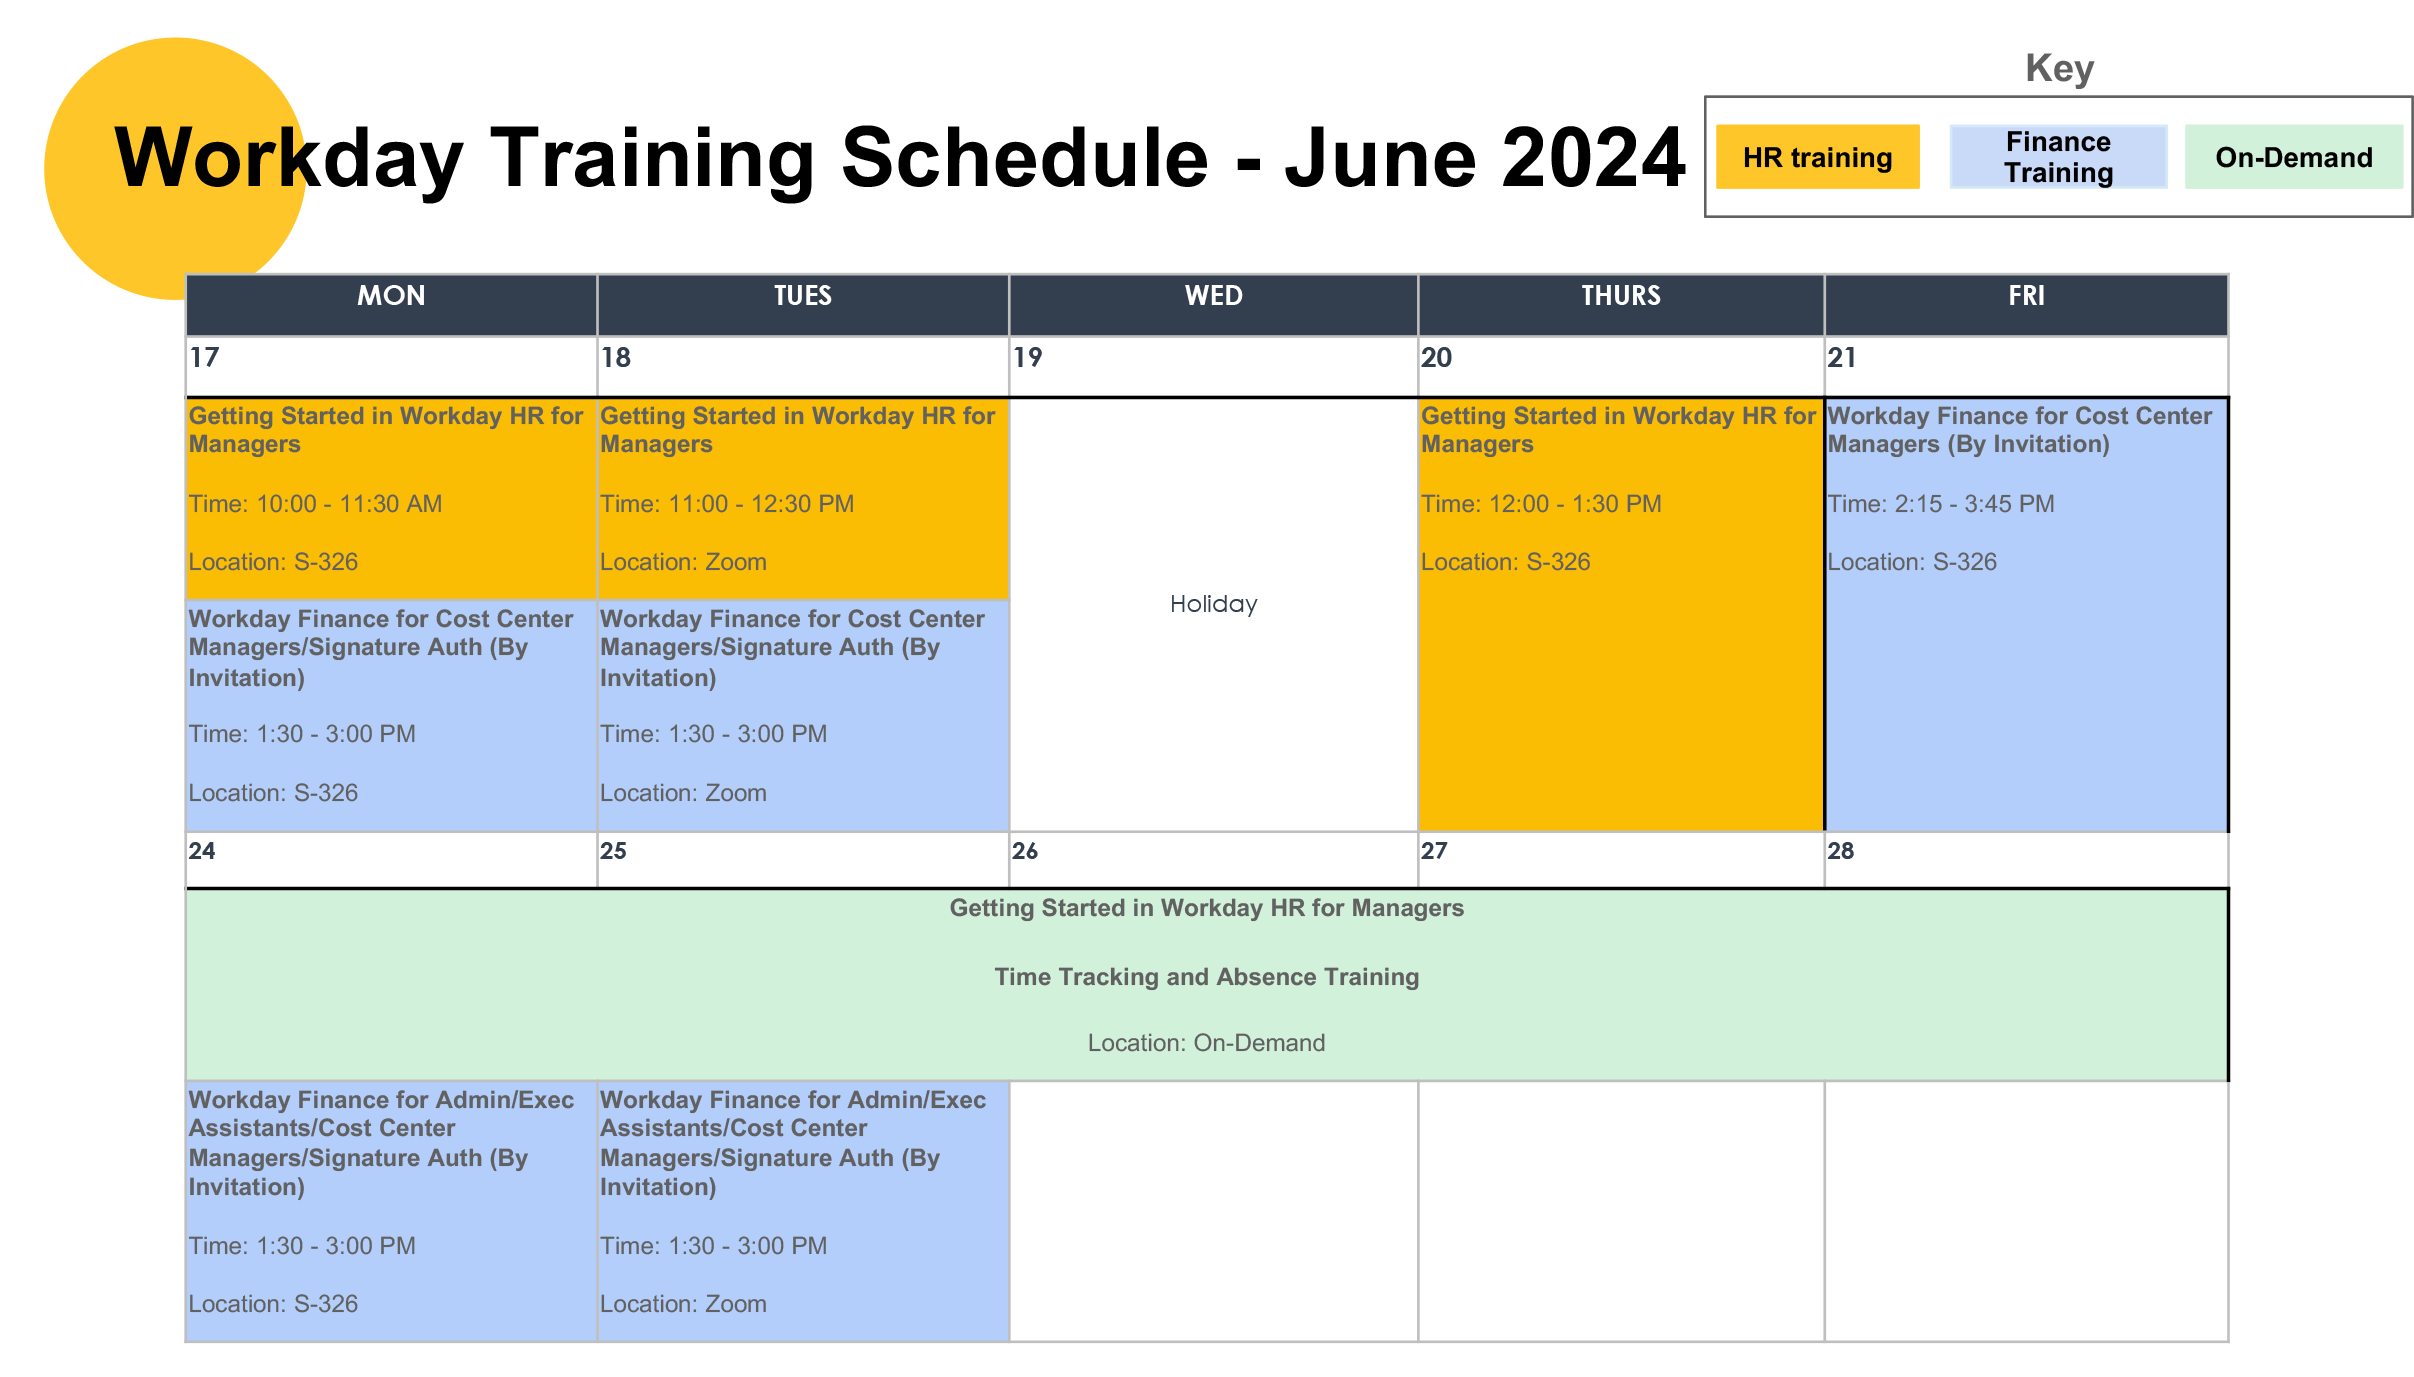 Workday Training Schedule - June 2024